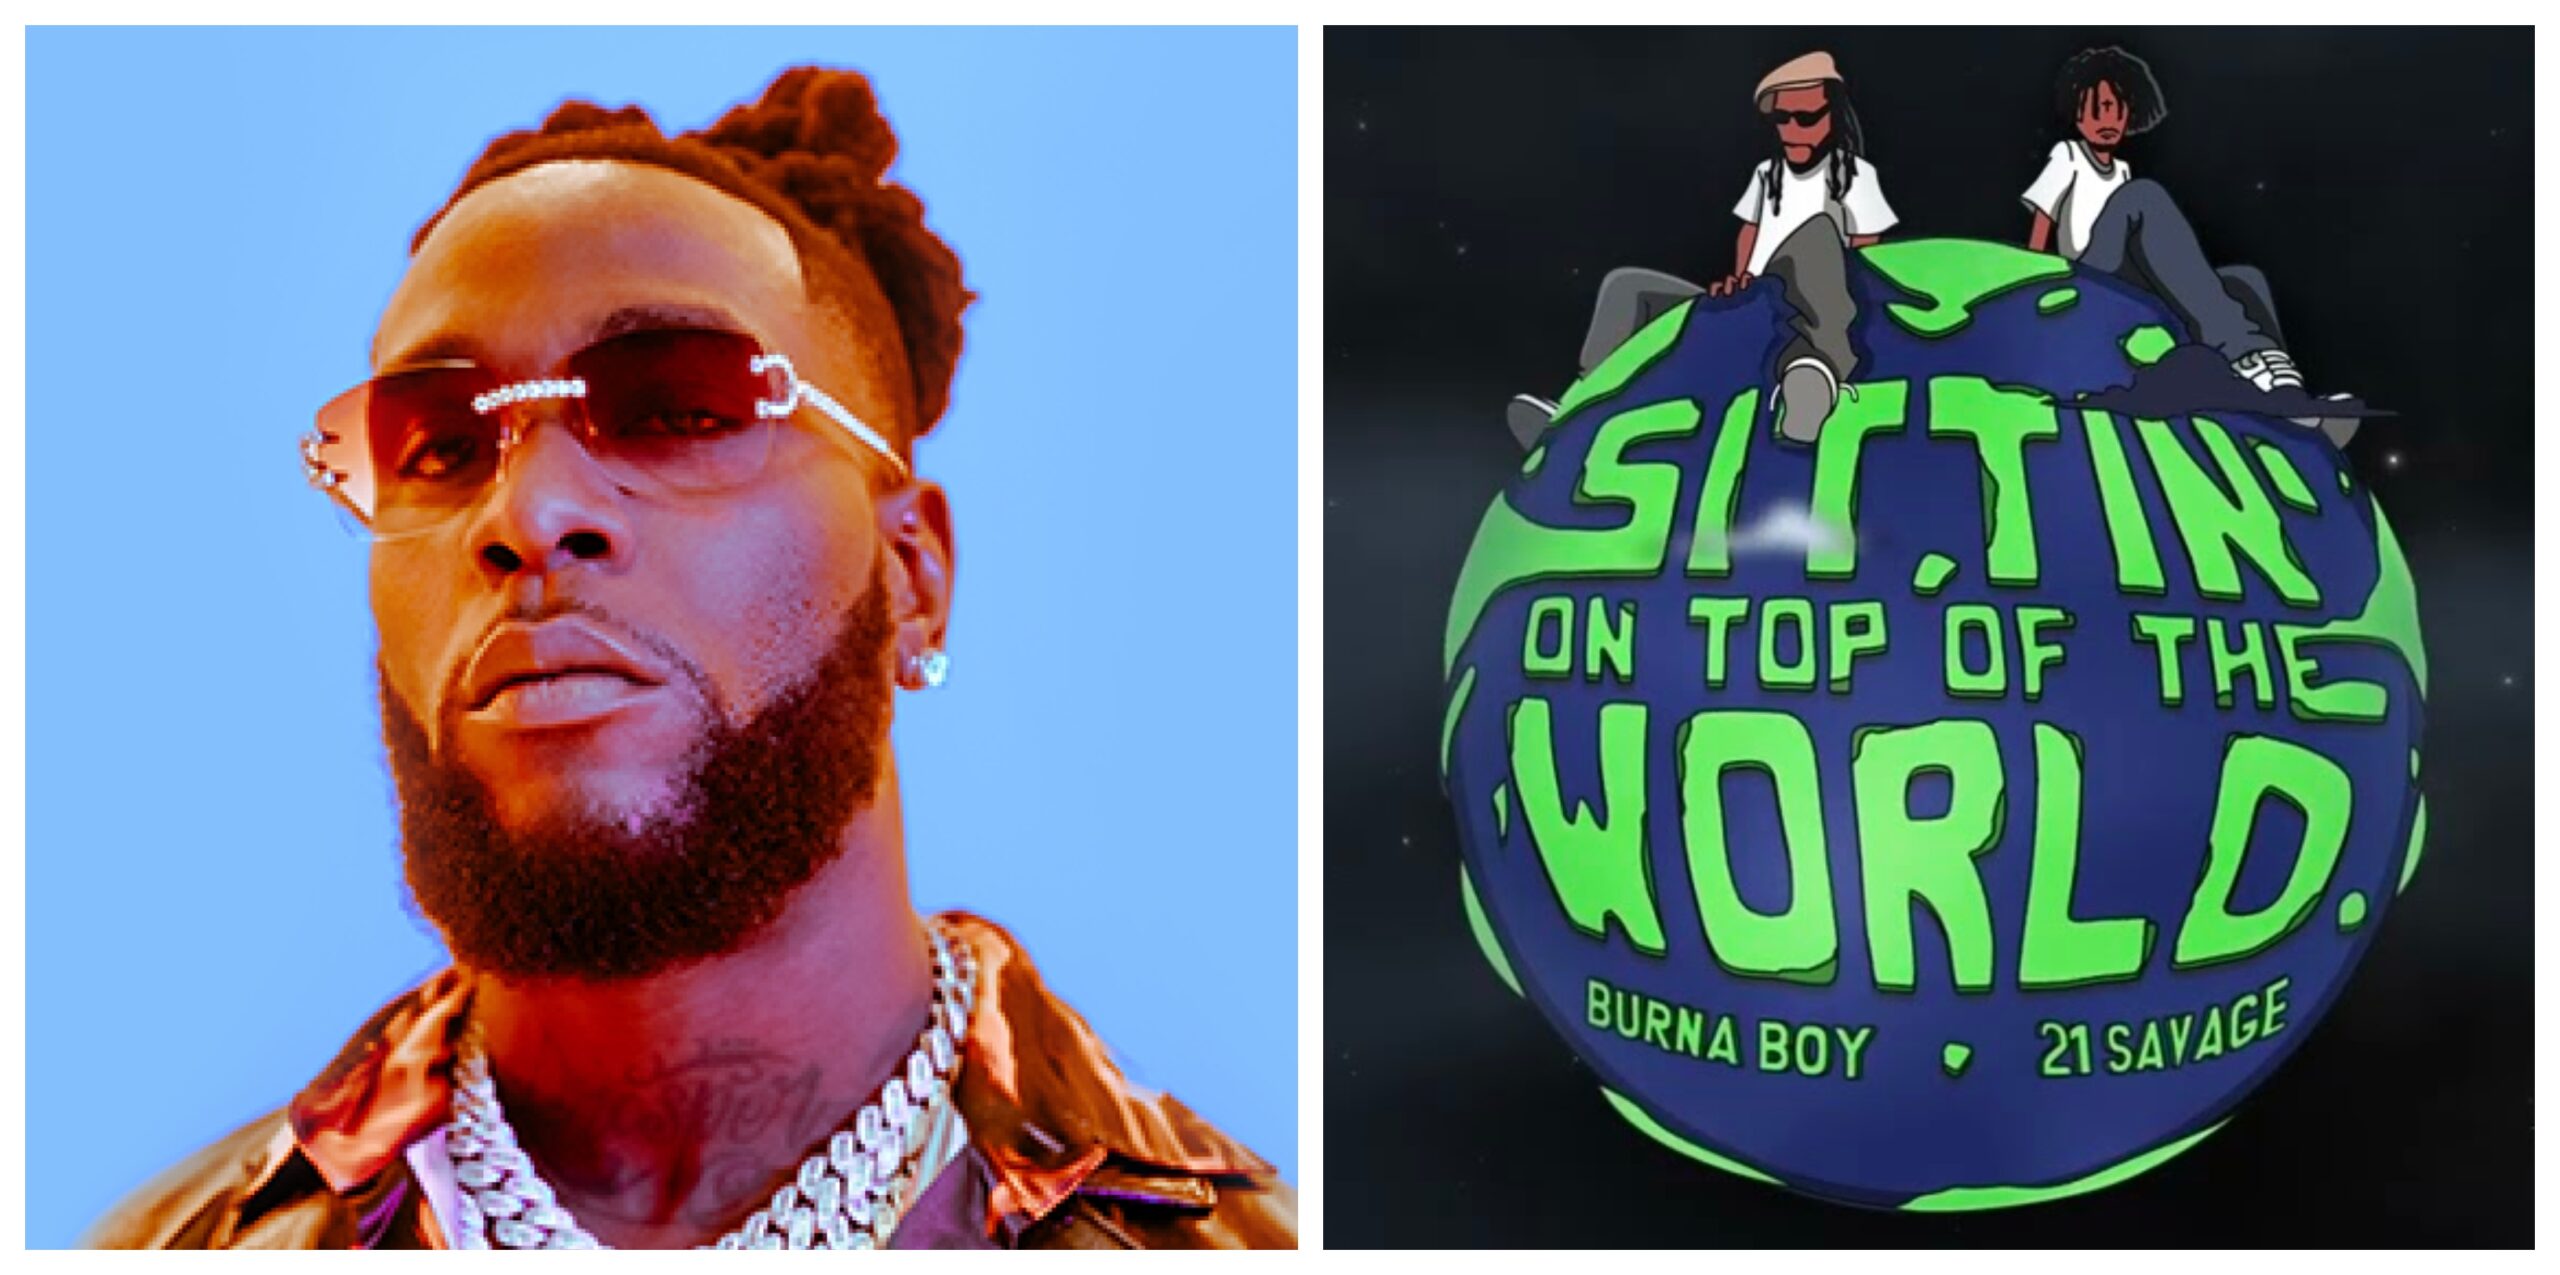 New Song: Burna Boy & 21 Savage – ‘Sittin’ On Top Of The World [Remix]’